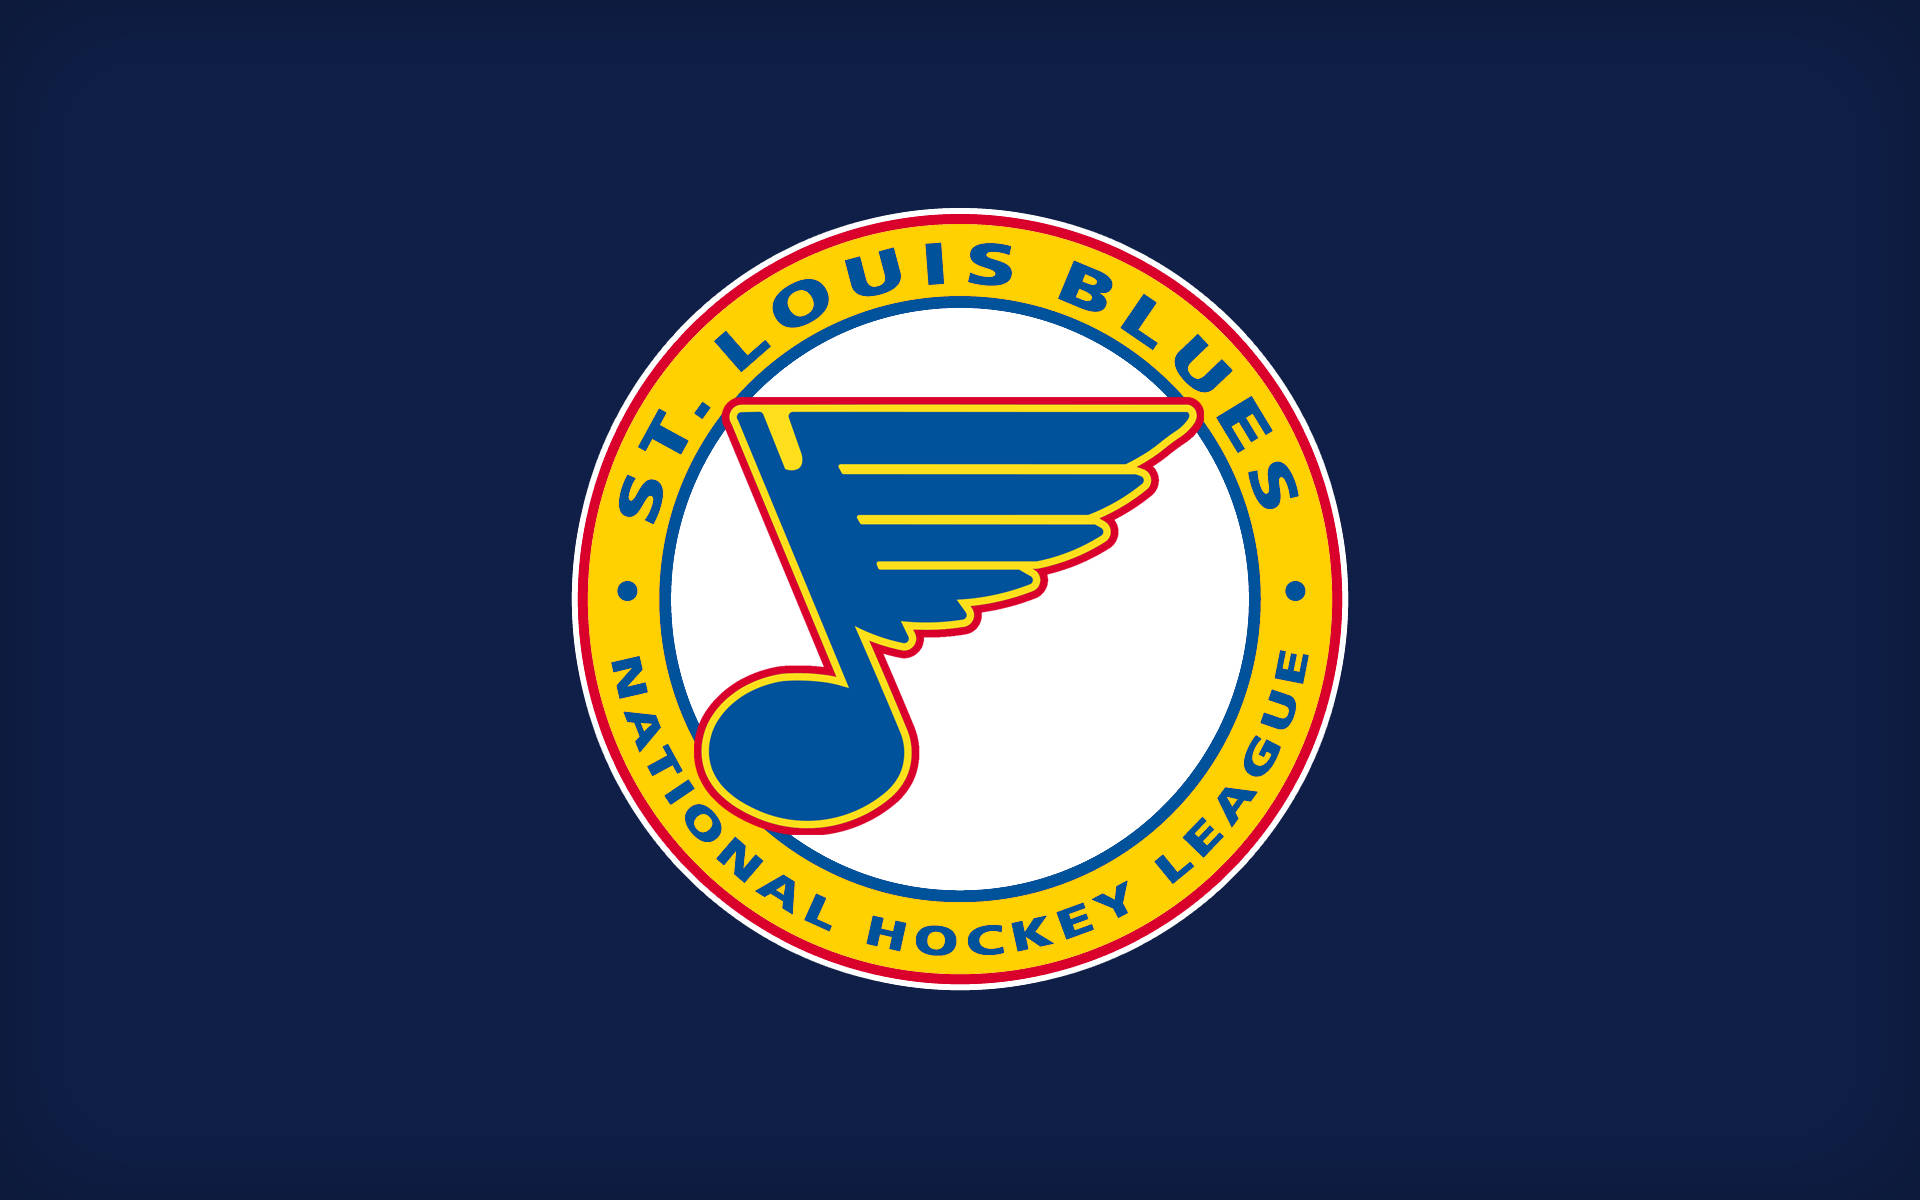 St Louis Blues Hockey League Icon Background